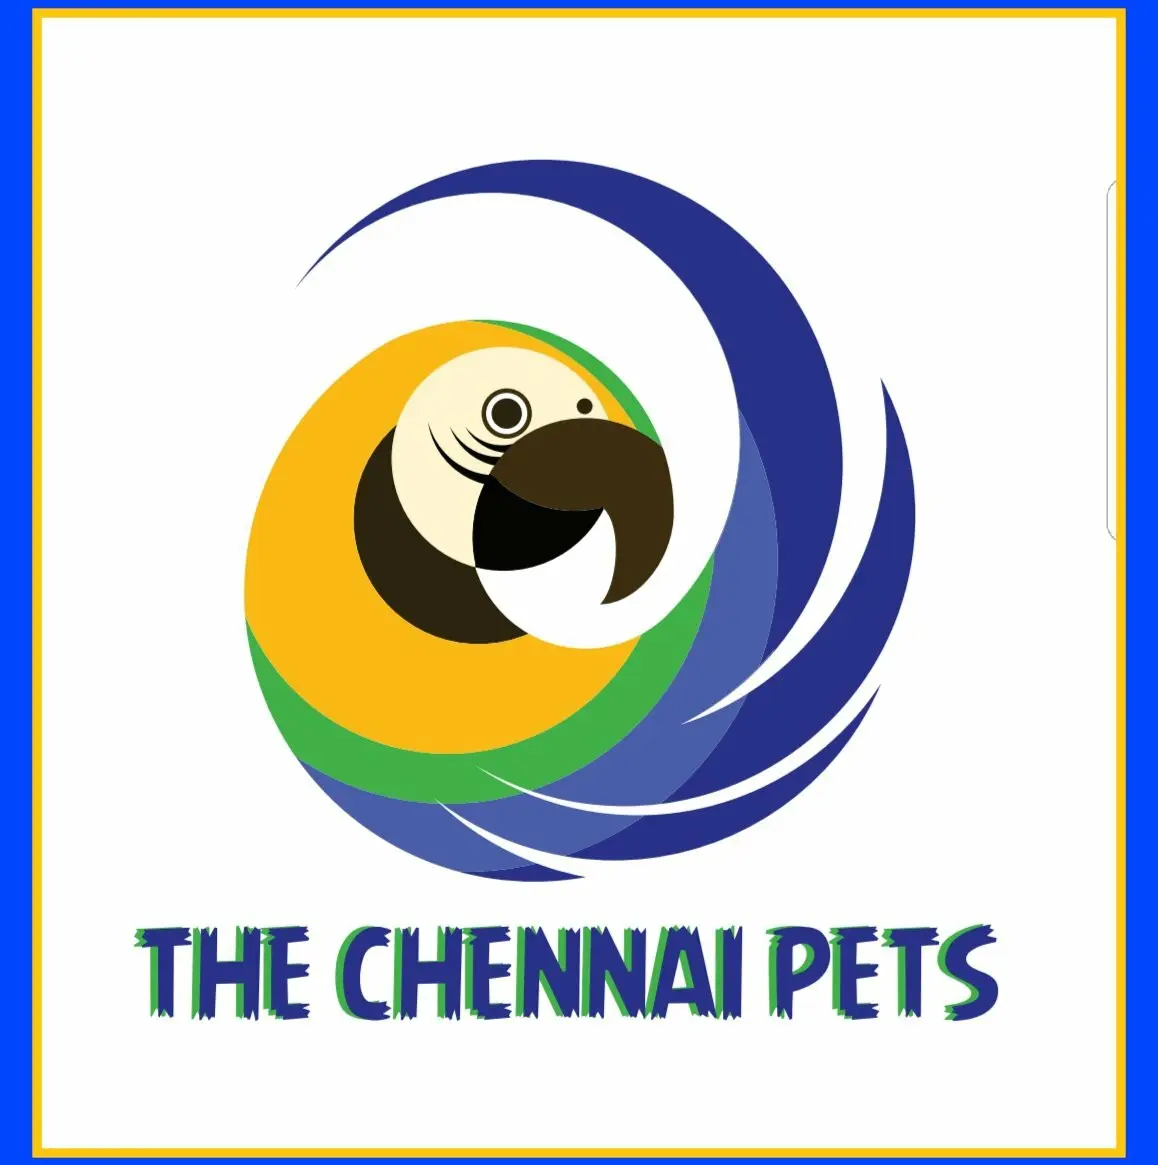 The Chennai Pets